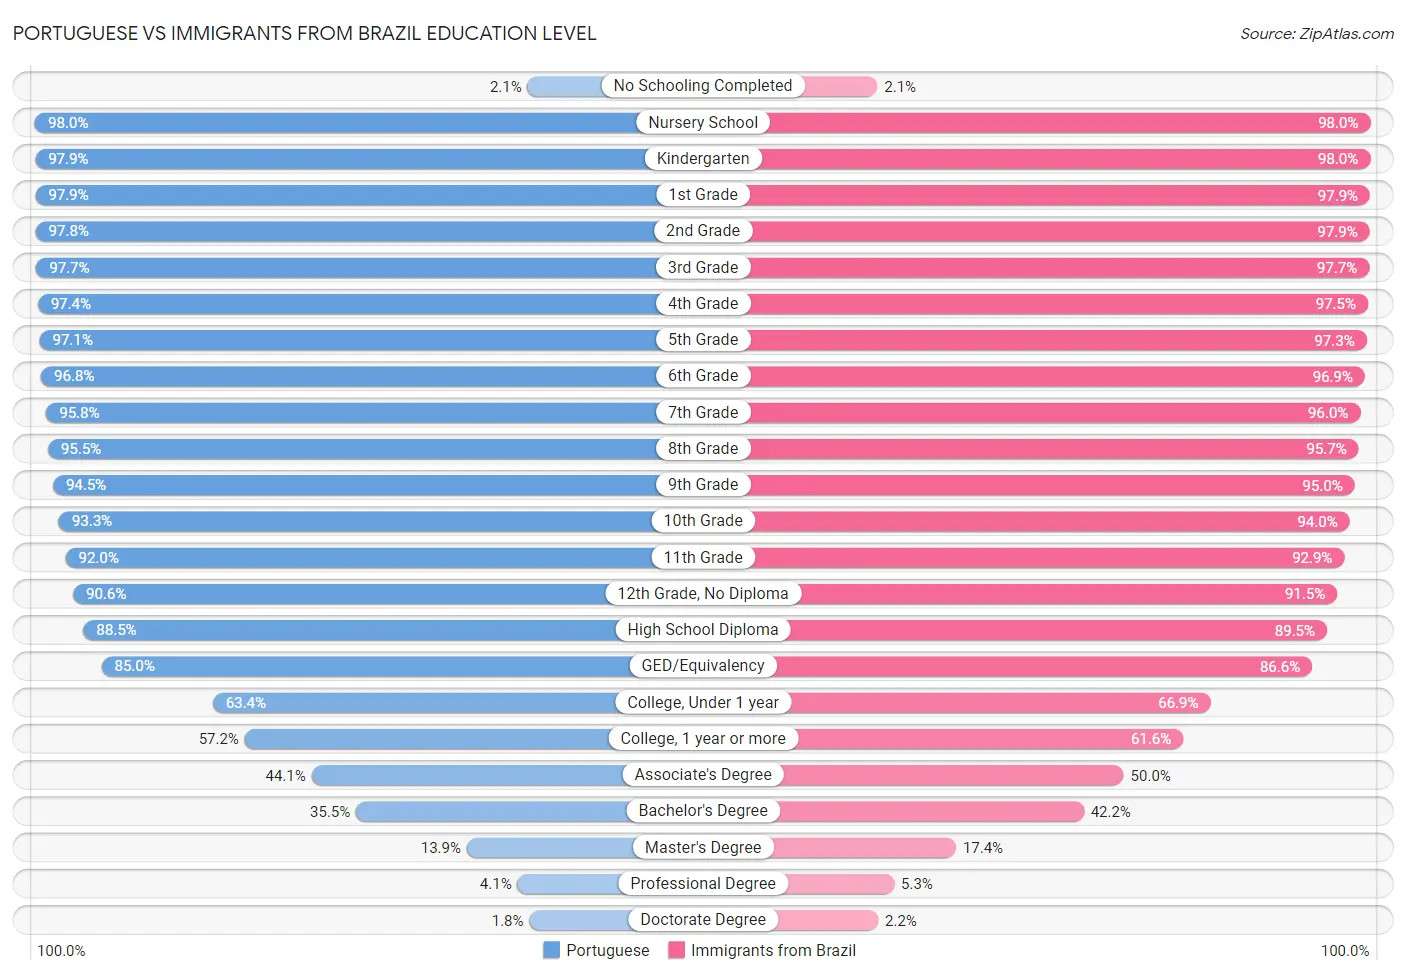 Portuguese vs Immigrants from Brazil Education Level